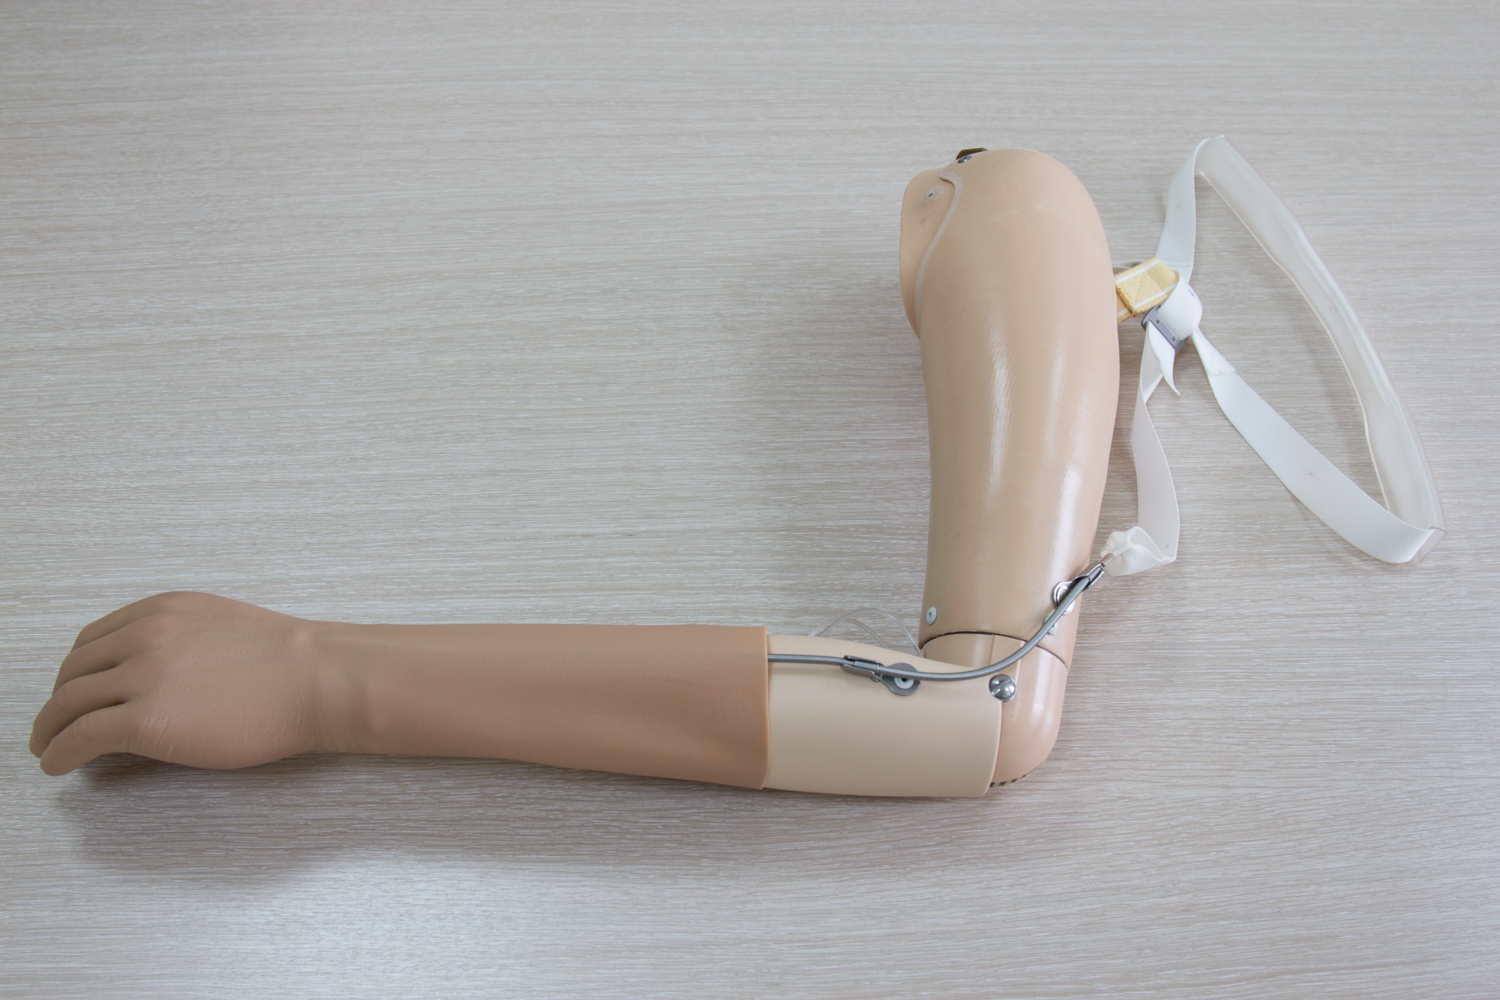 Upper limb prostheses